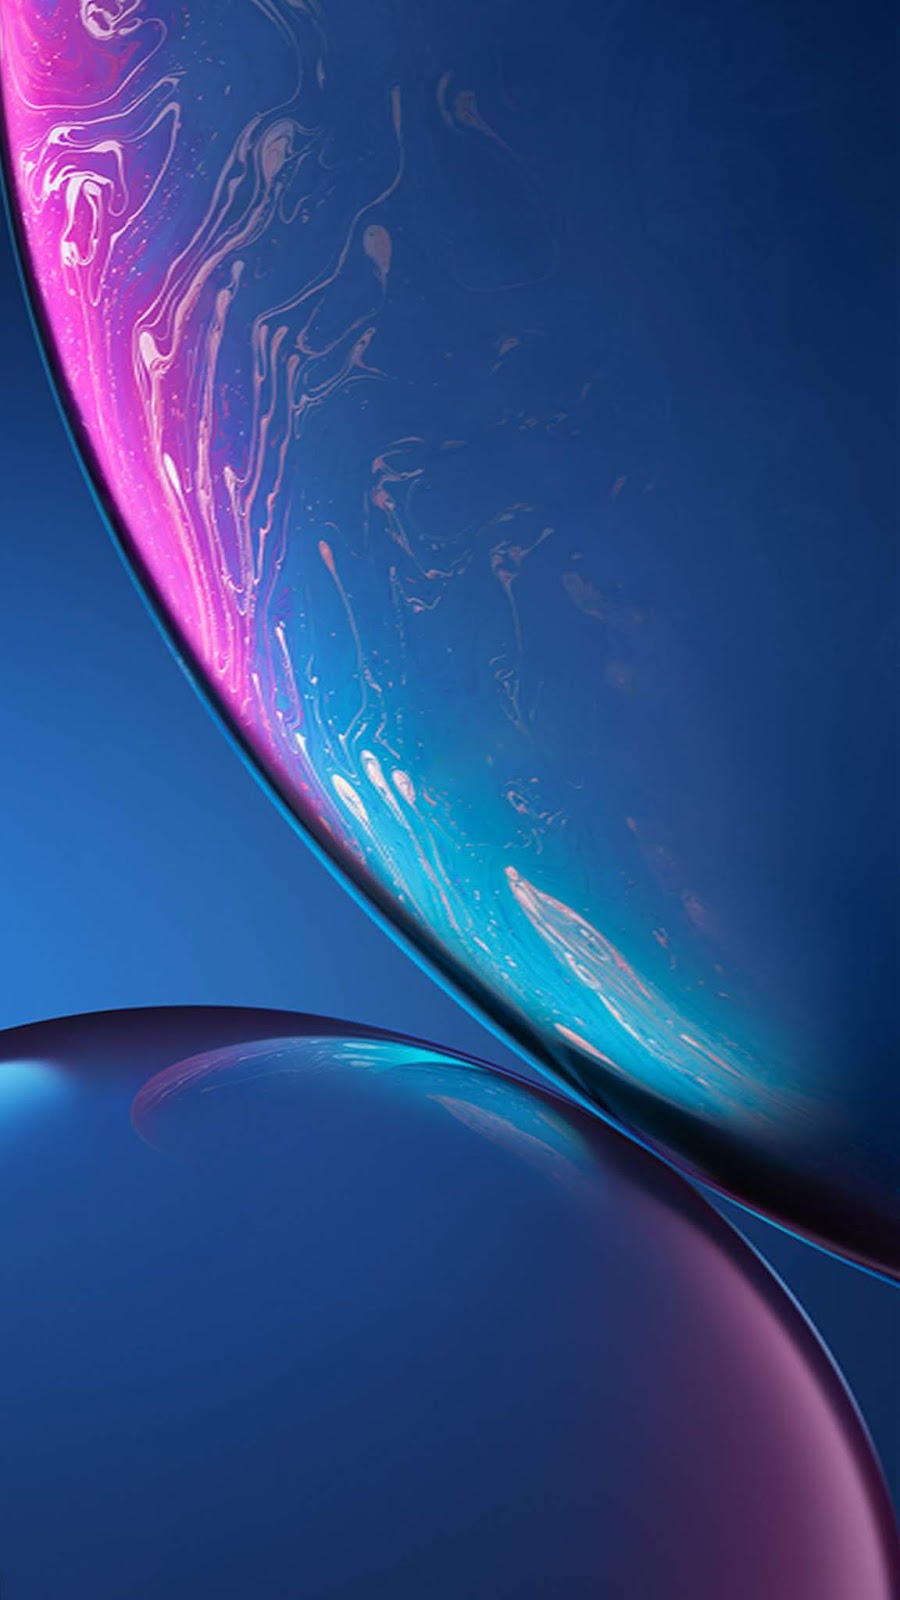 iPhone XR wallpaper   blue   MacTrast